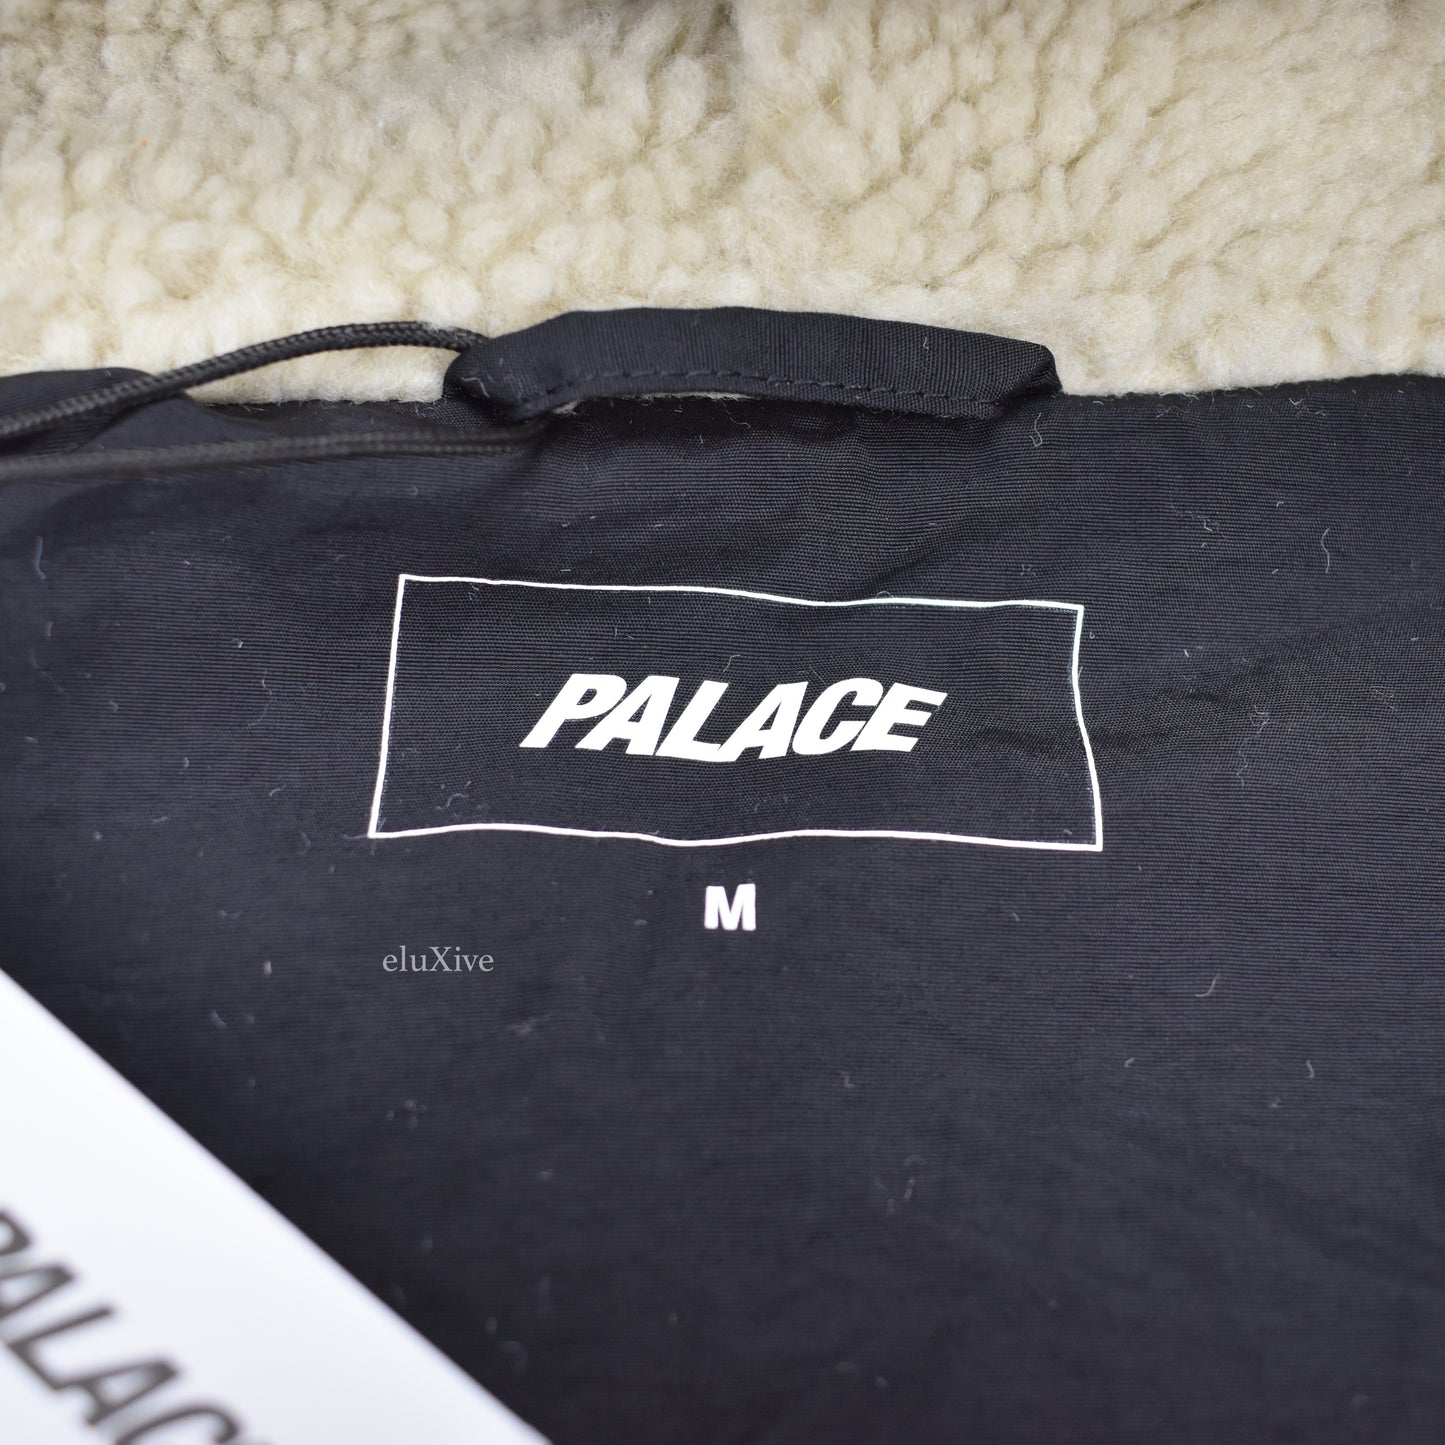 Palace - Palaska Knit Fleece Hoodie